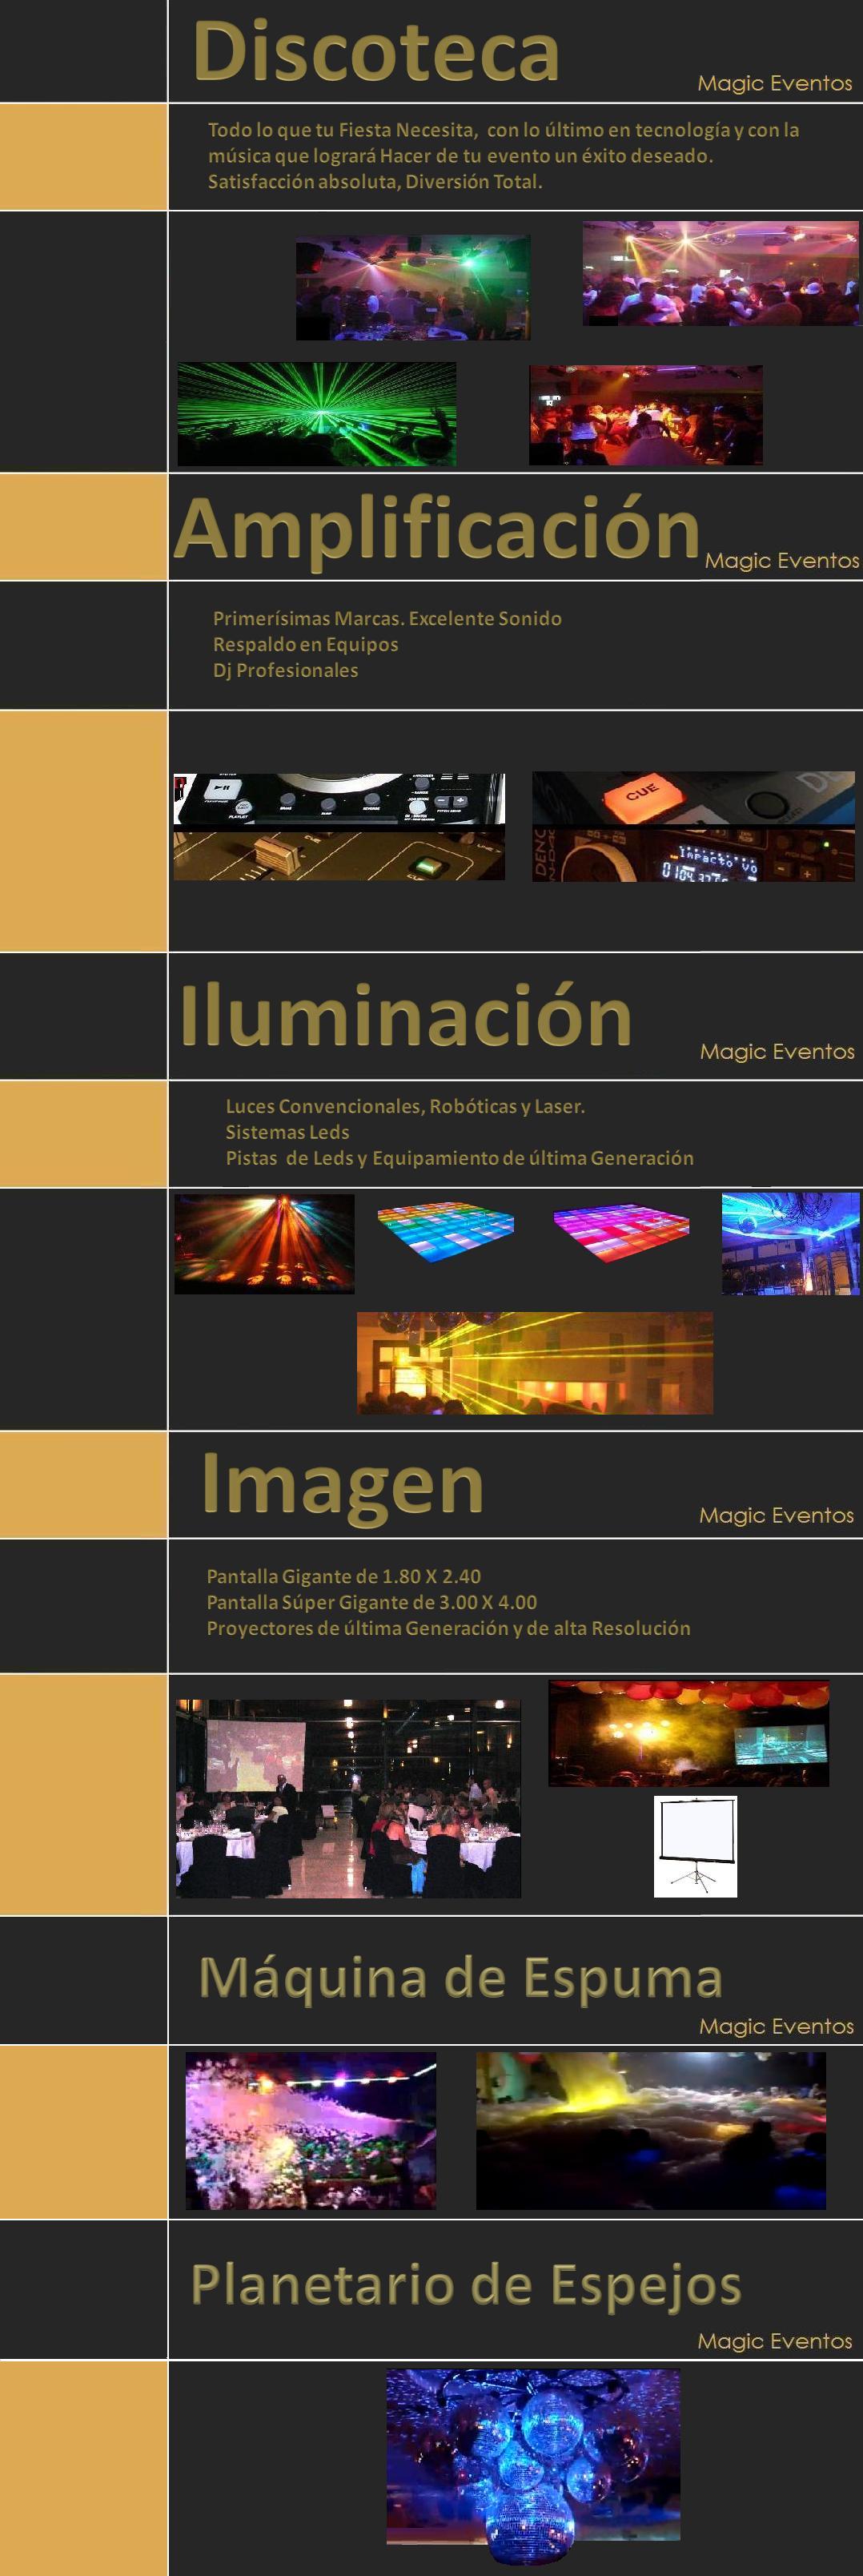 discoteca_impacto_uruguay-magic_eventos_nuevo_2013.jpg